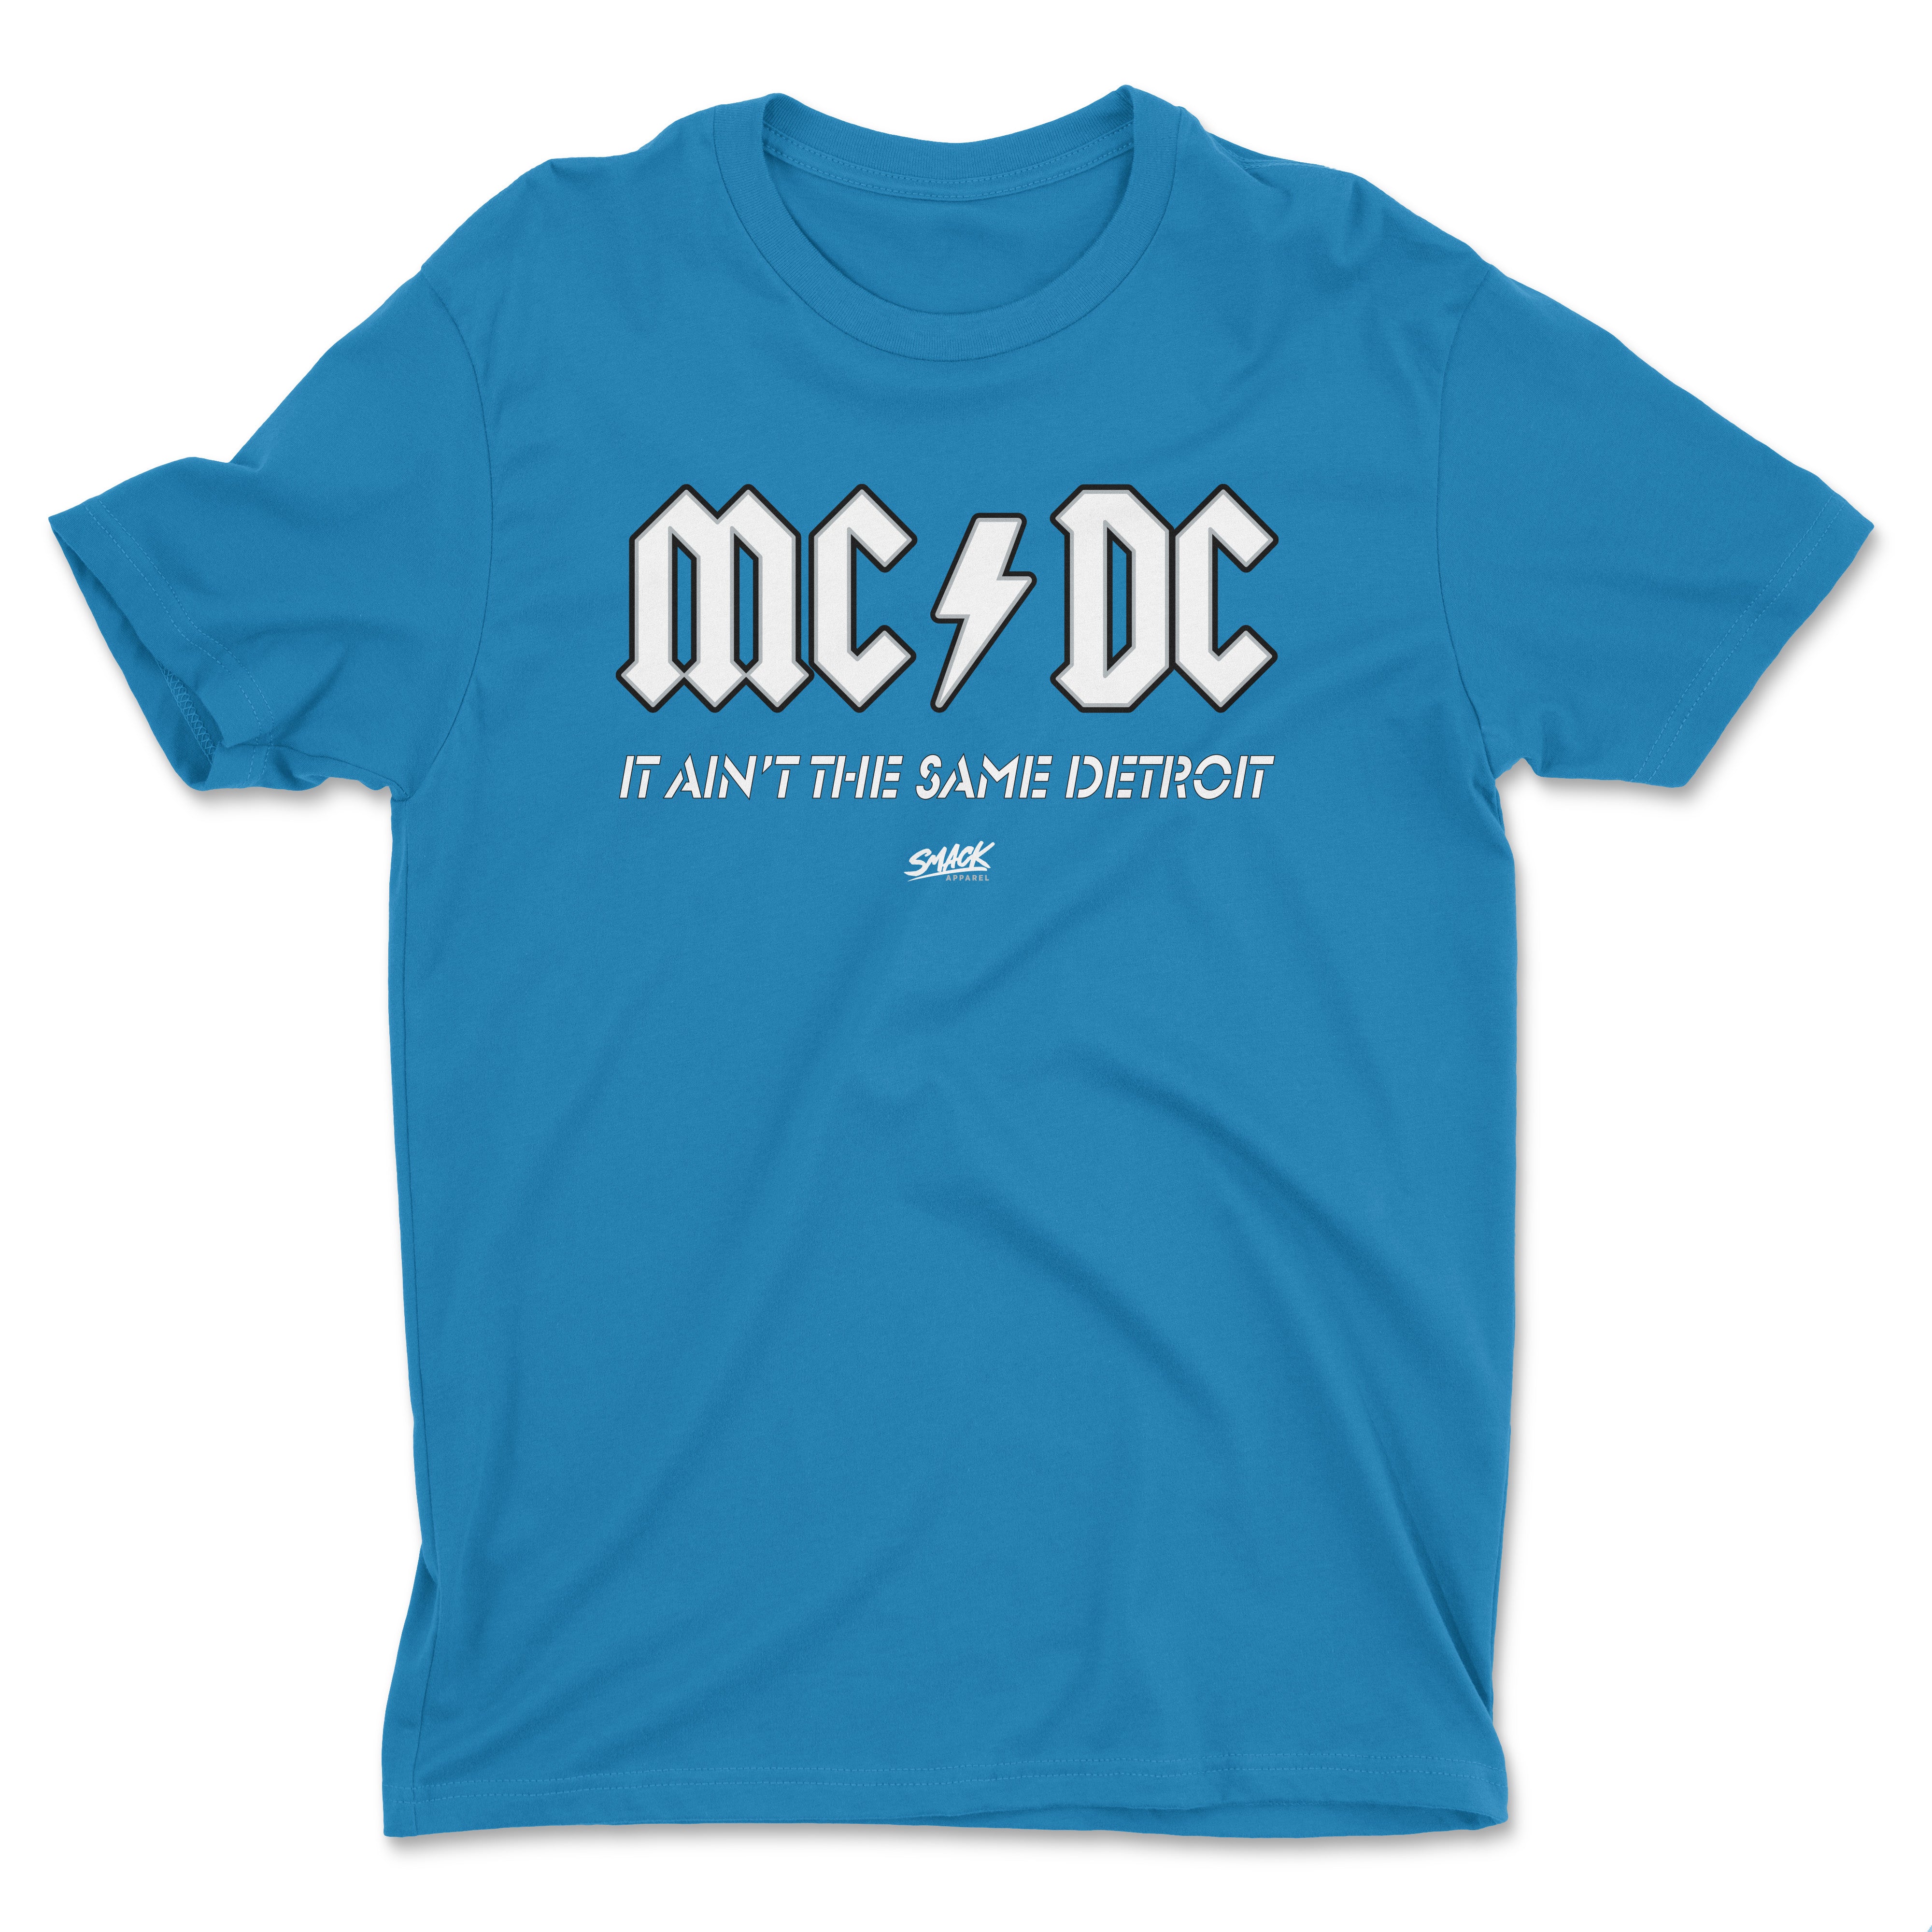 MC - DC  T-Shirt for Detroit Football Fans (SM-5XL)